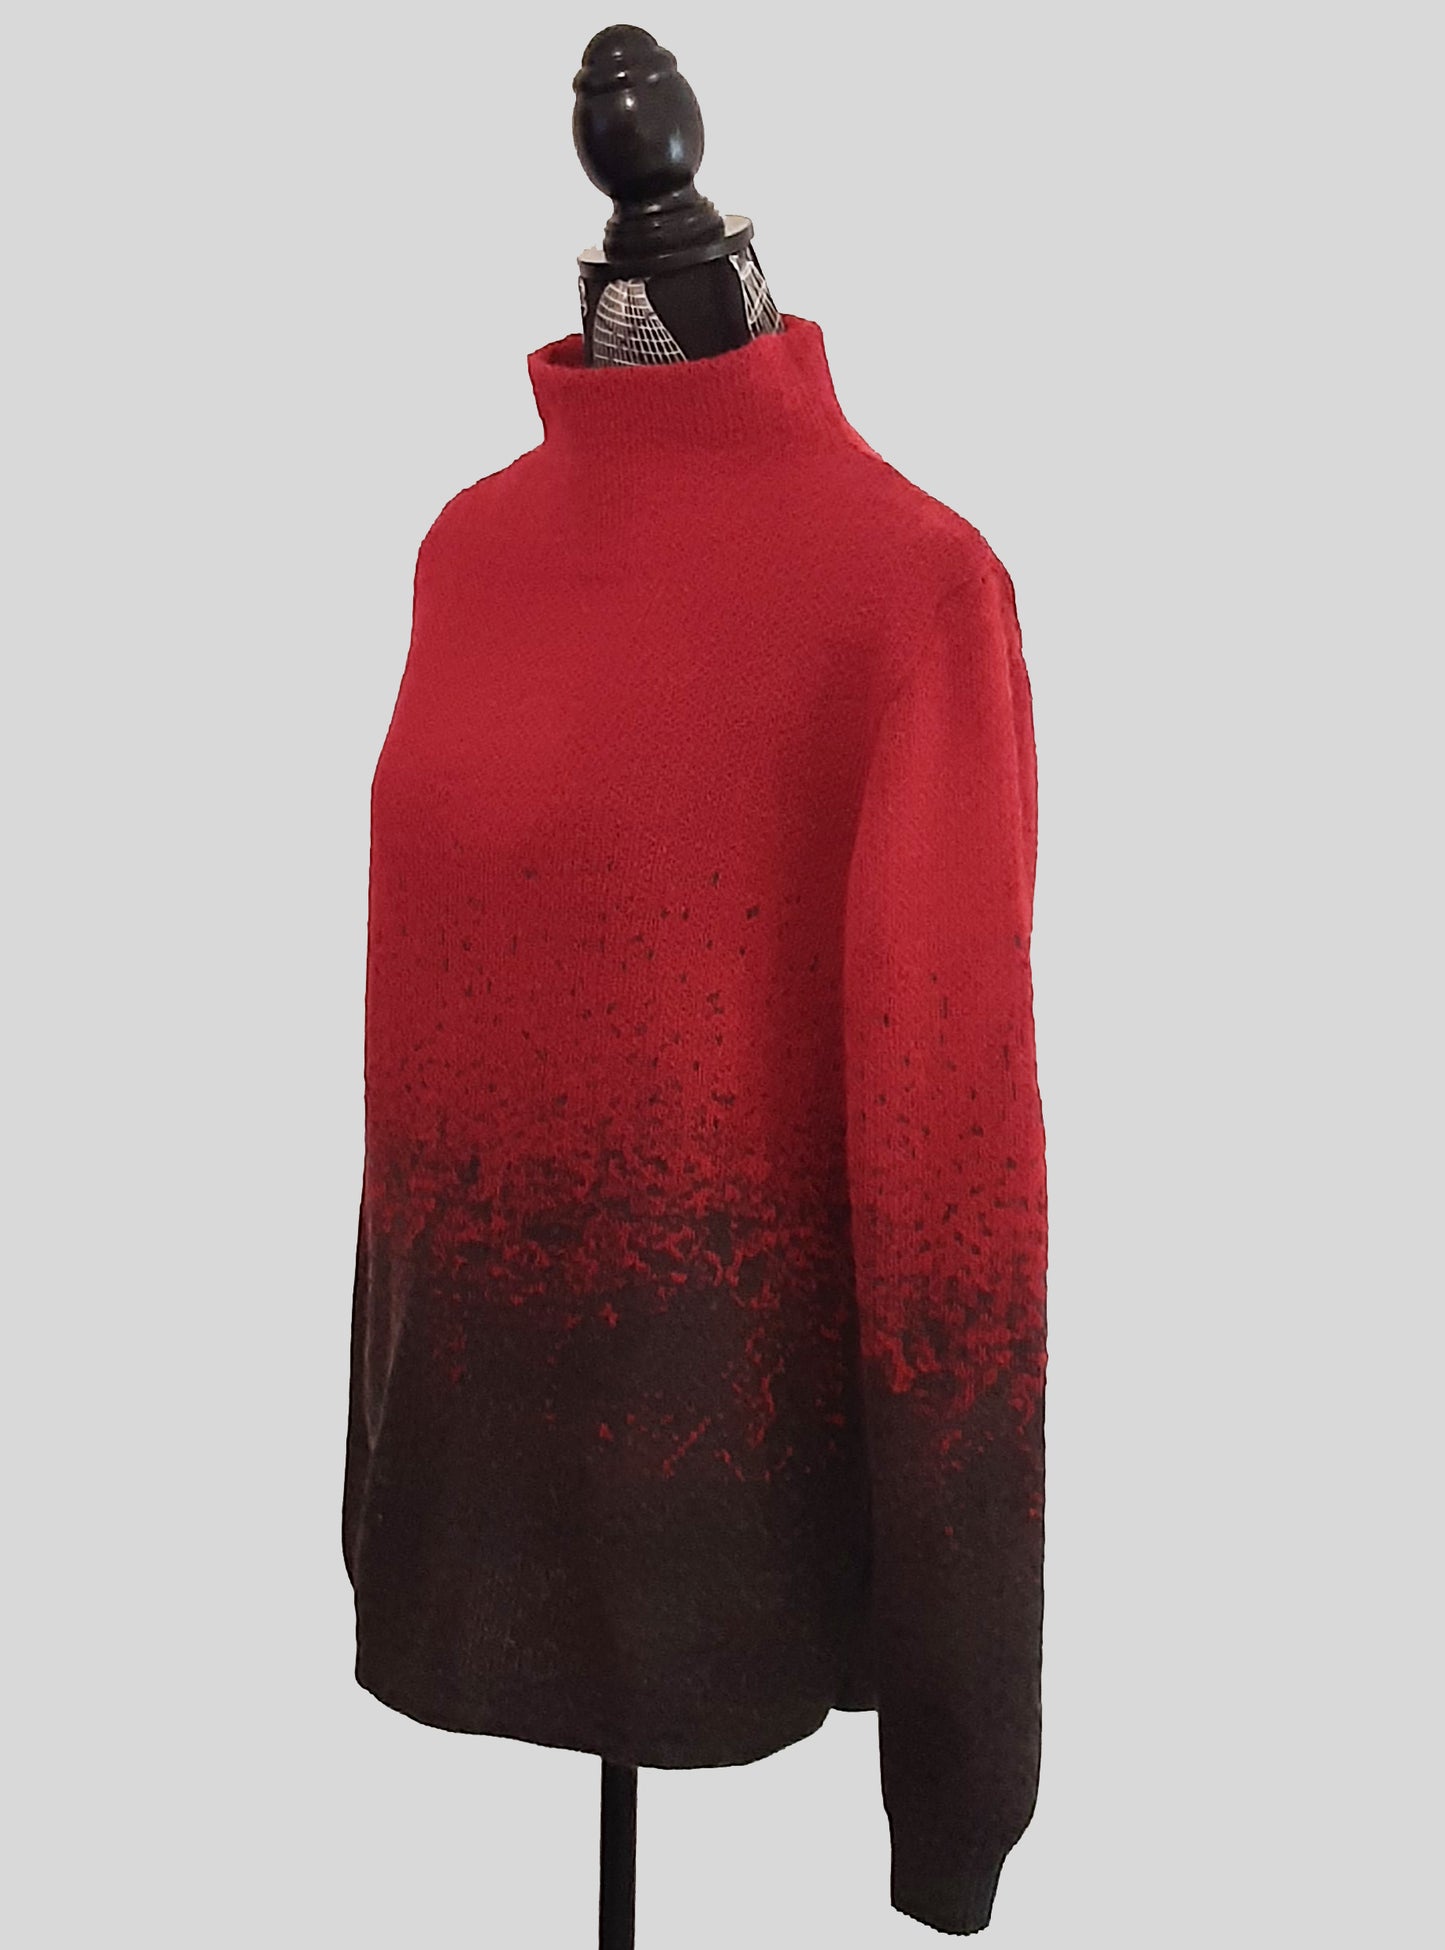 Alpaca Women’s High Neck Red Jacquard Knit Diesel